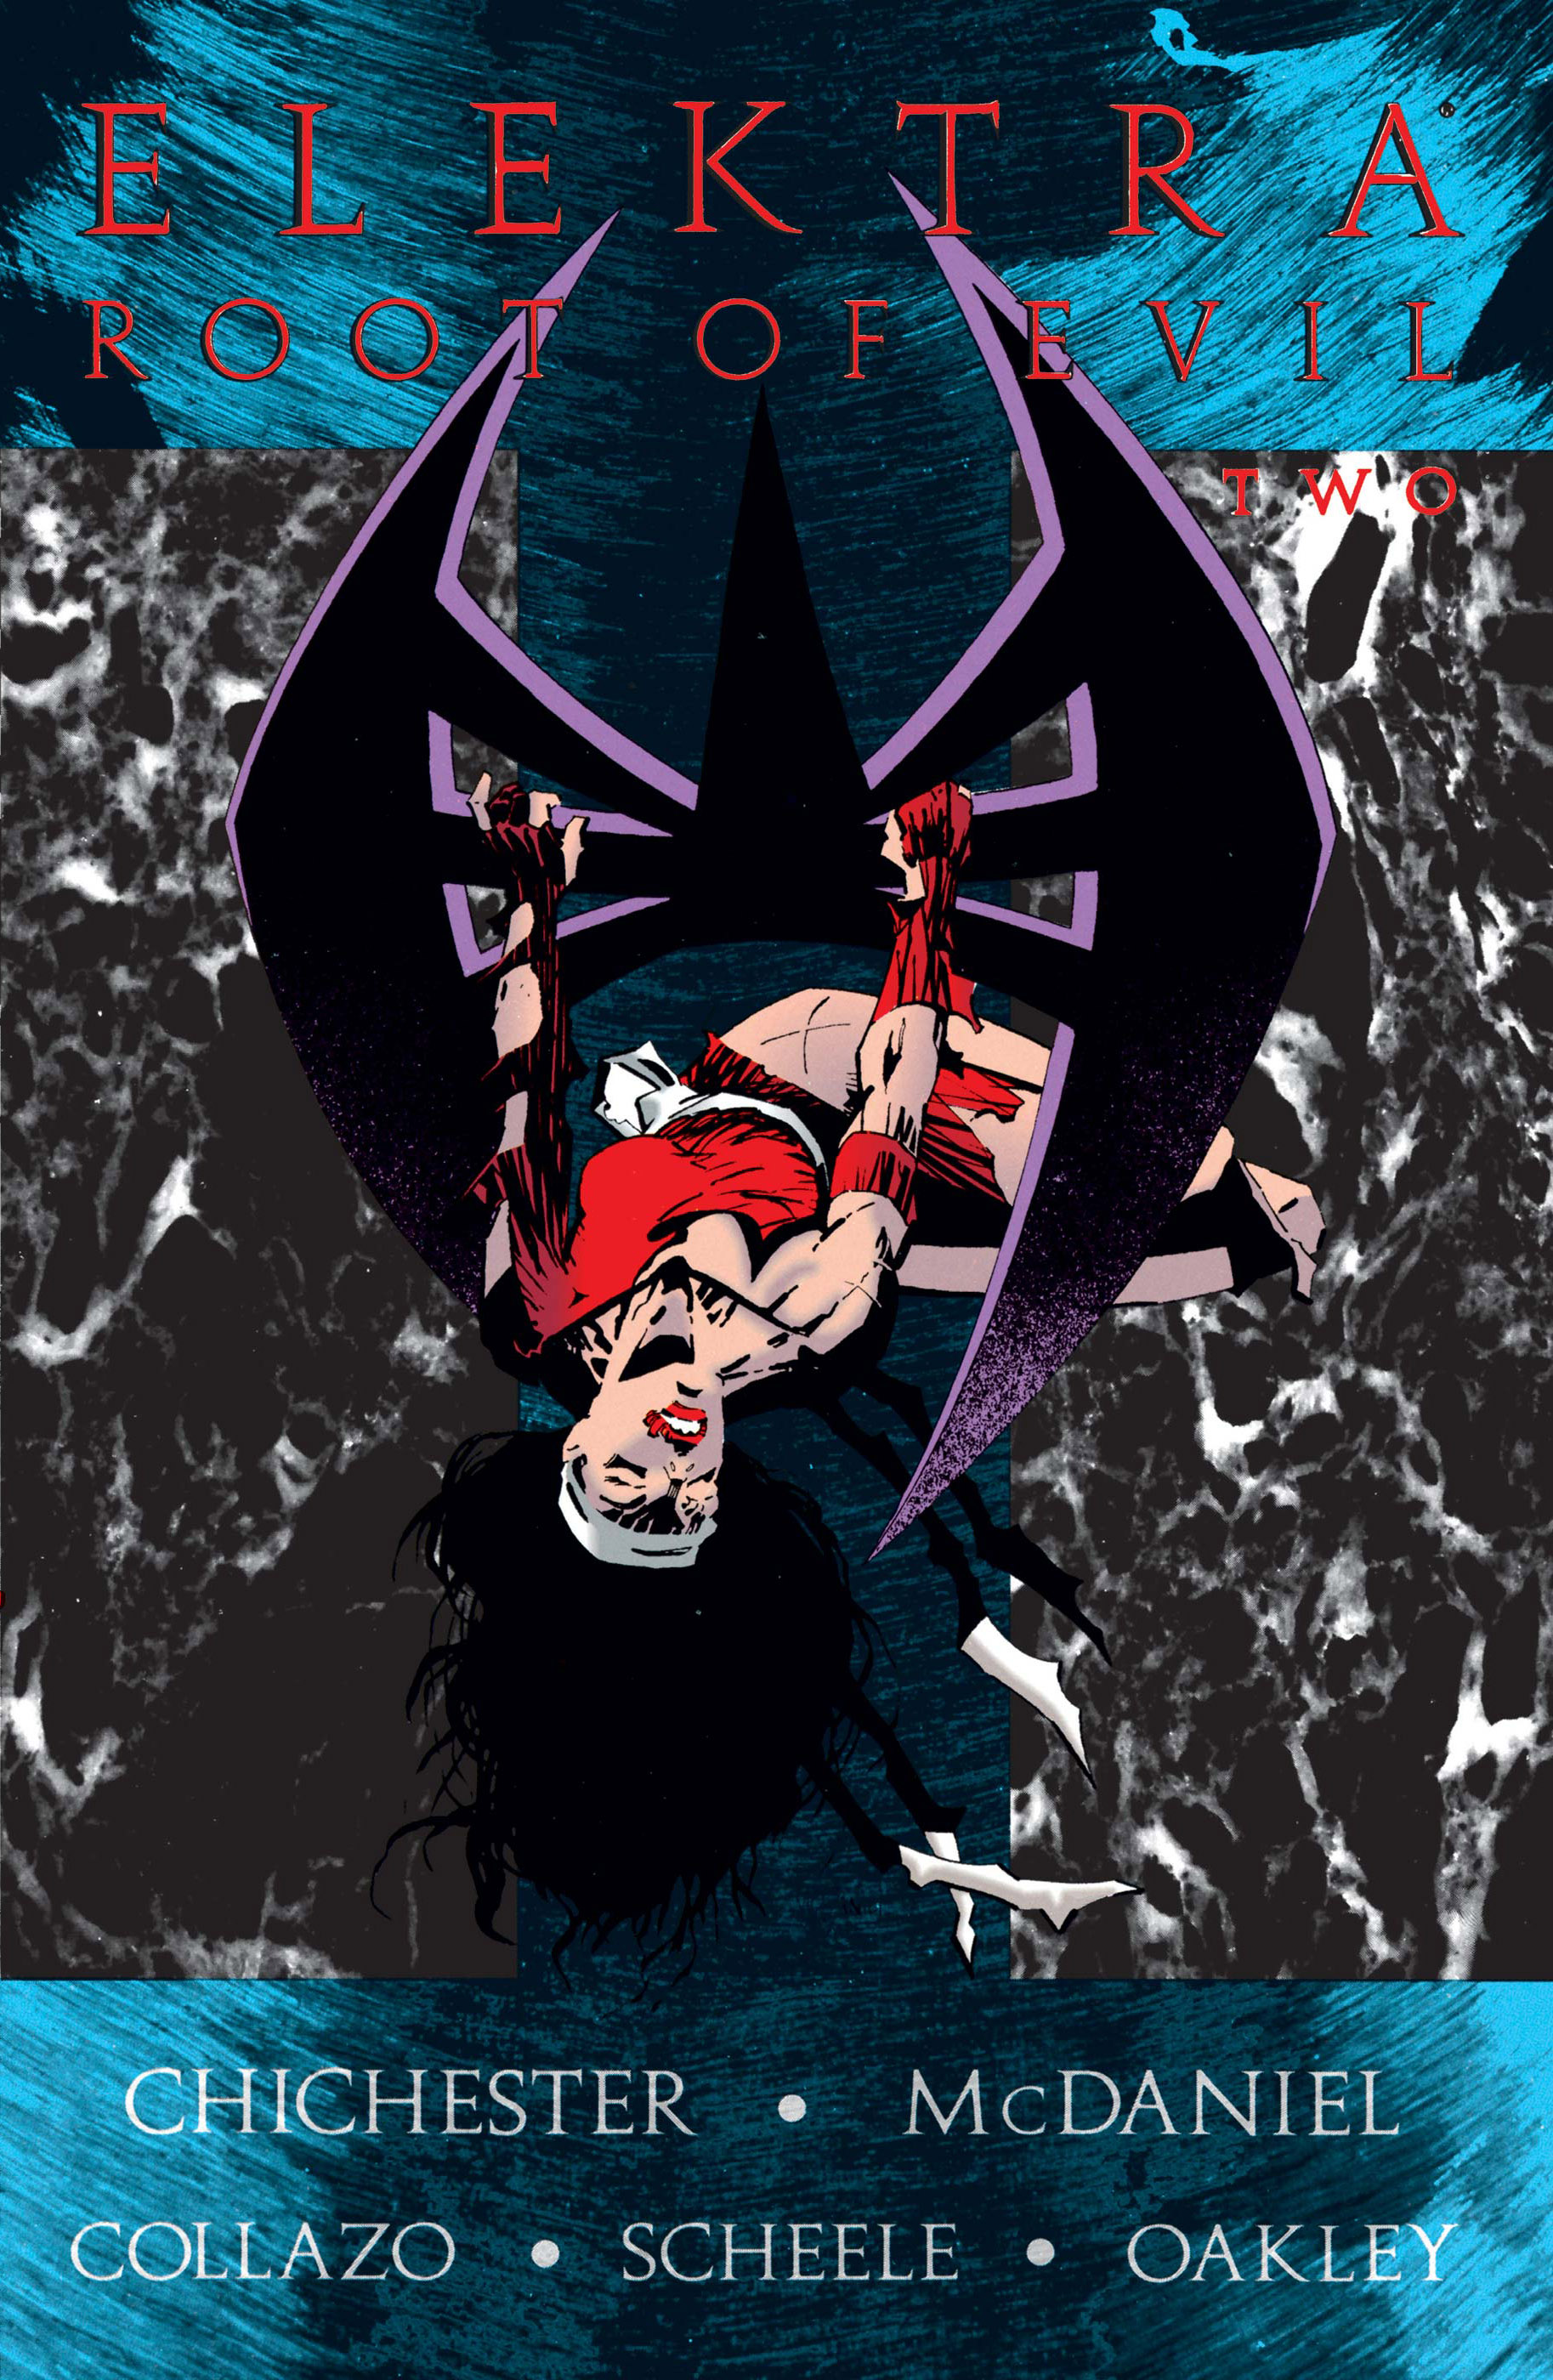 Elektra: Root of Evil (1995) #2